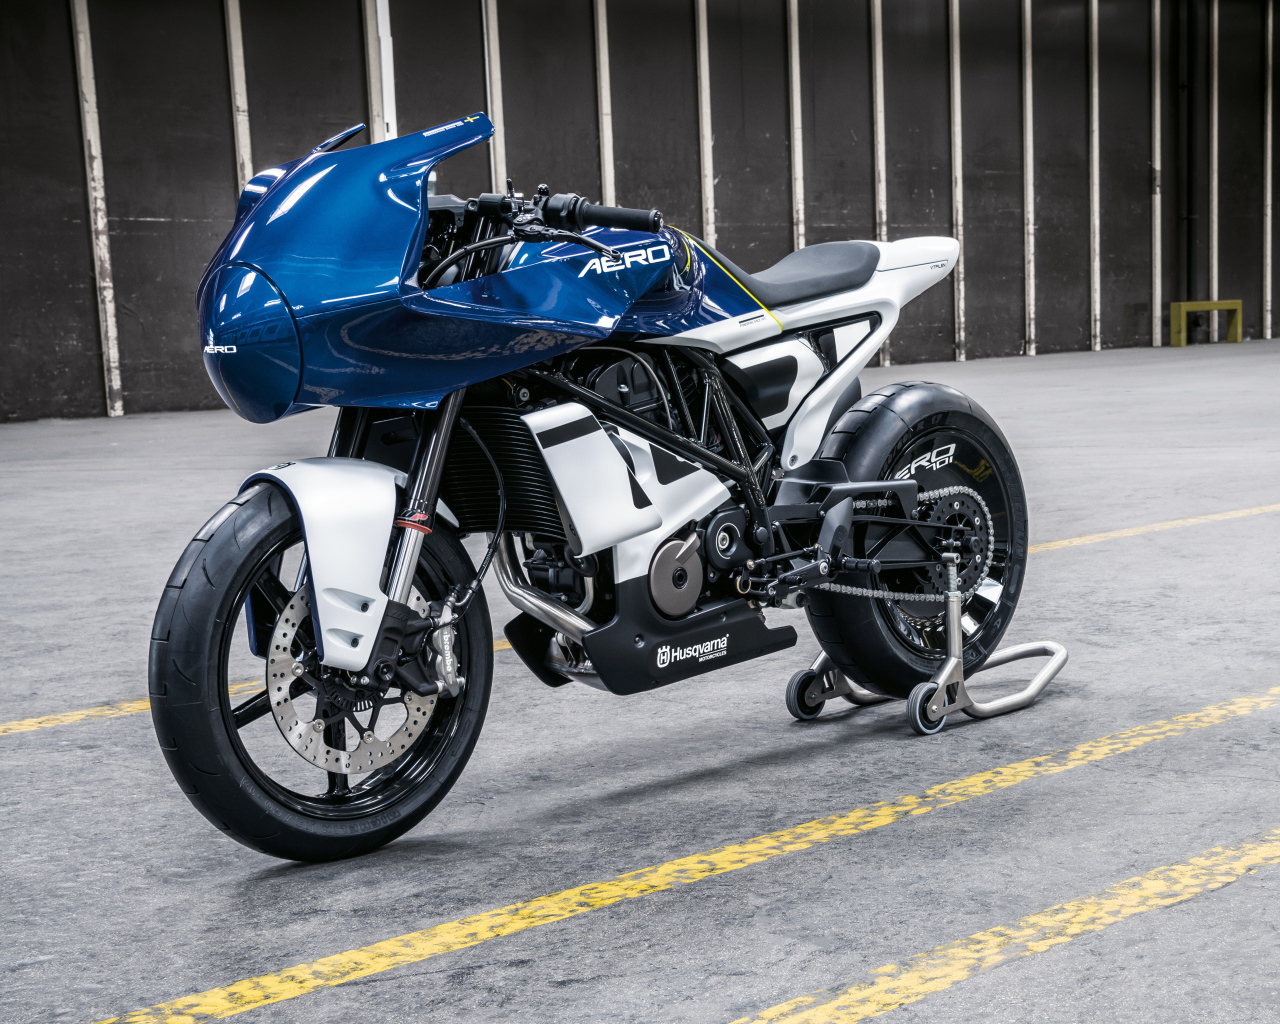 2019 Husqvarna Vitpilen 701 Aero Concept motorcycle on the road